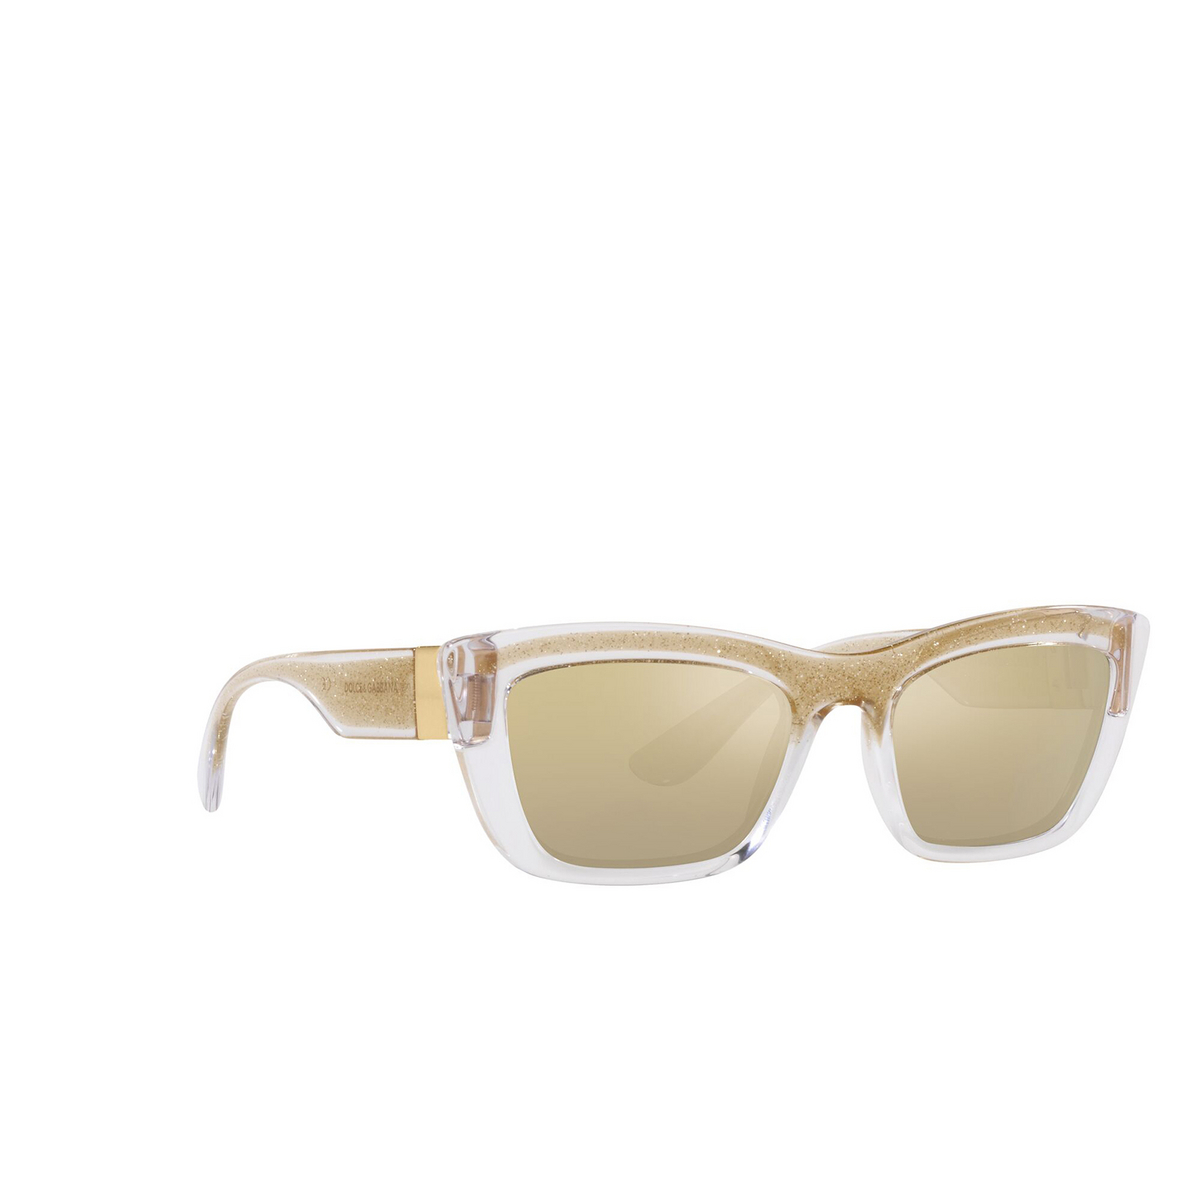 Occhiali da sole Dolce & Gabbana DG6171 3352V9 Transparent/Gold Glitter - tre quarti